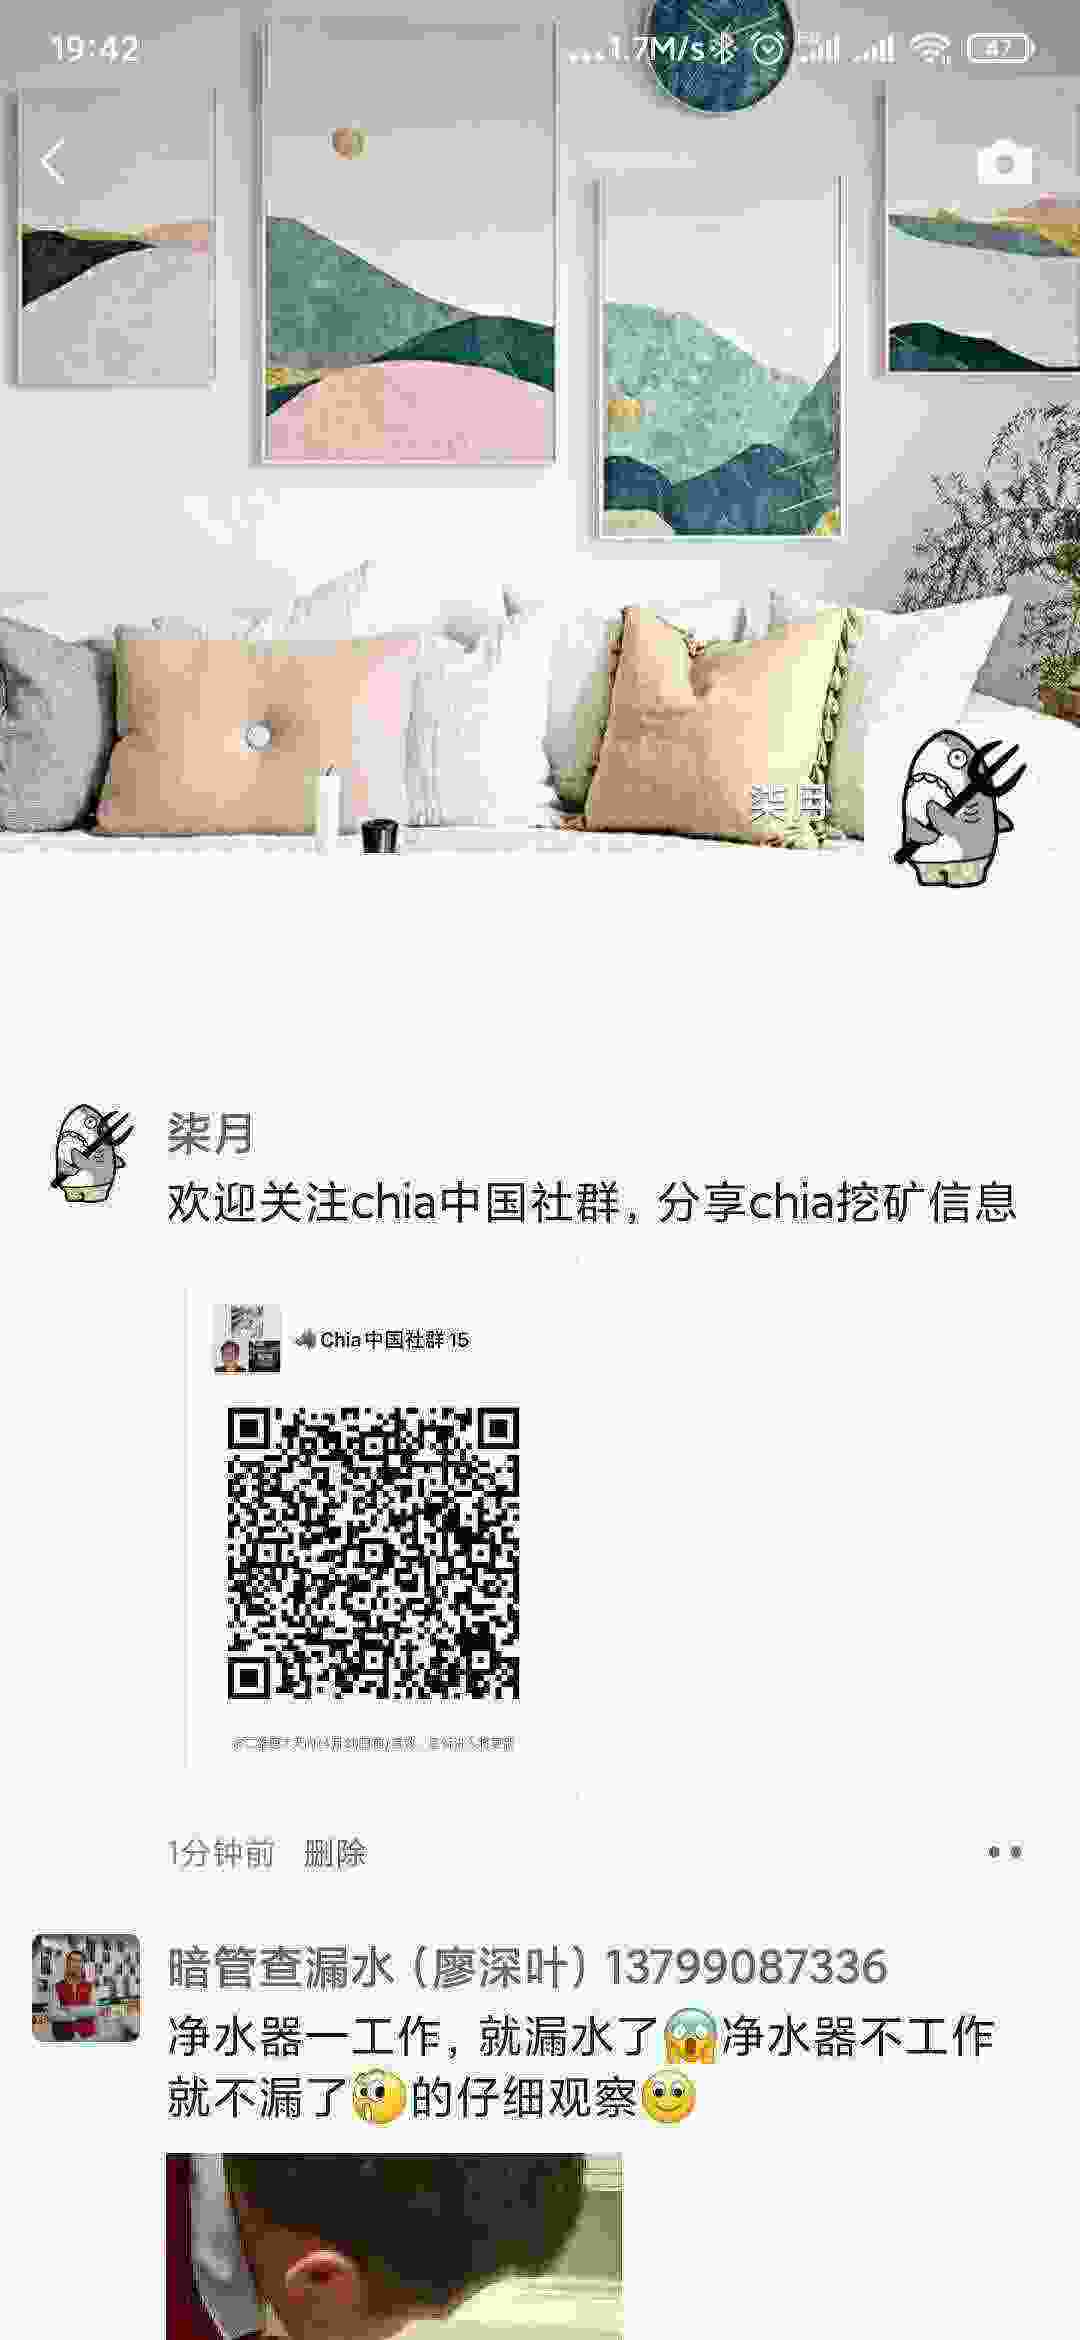 Screenshot_2021-04-23-19-42-02-327_com.tencent.mm.jpg